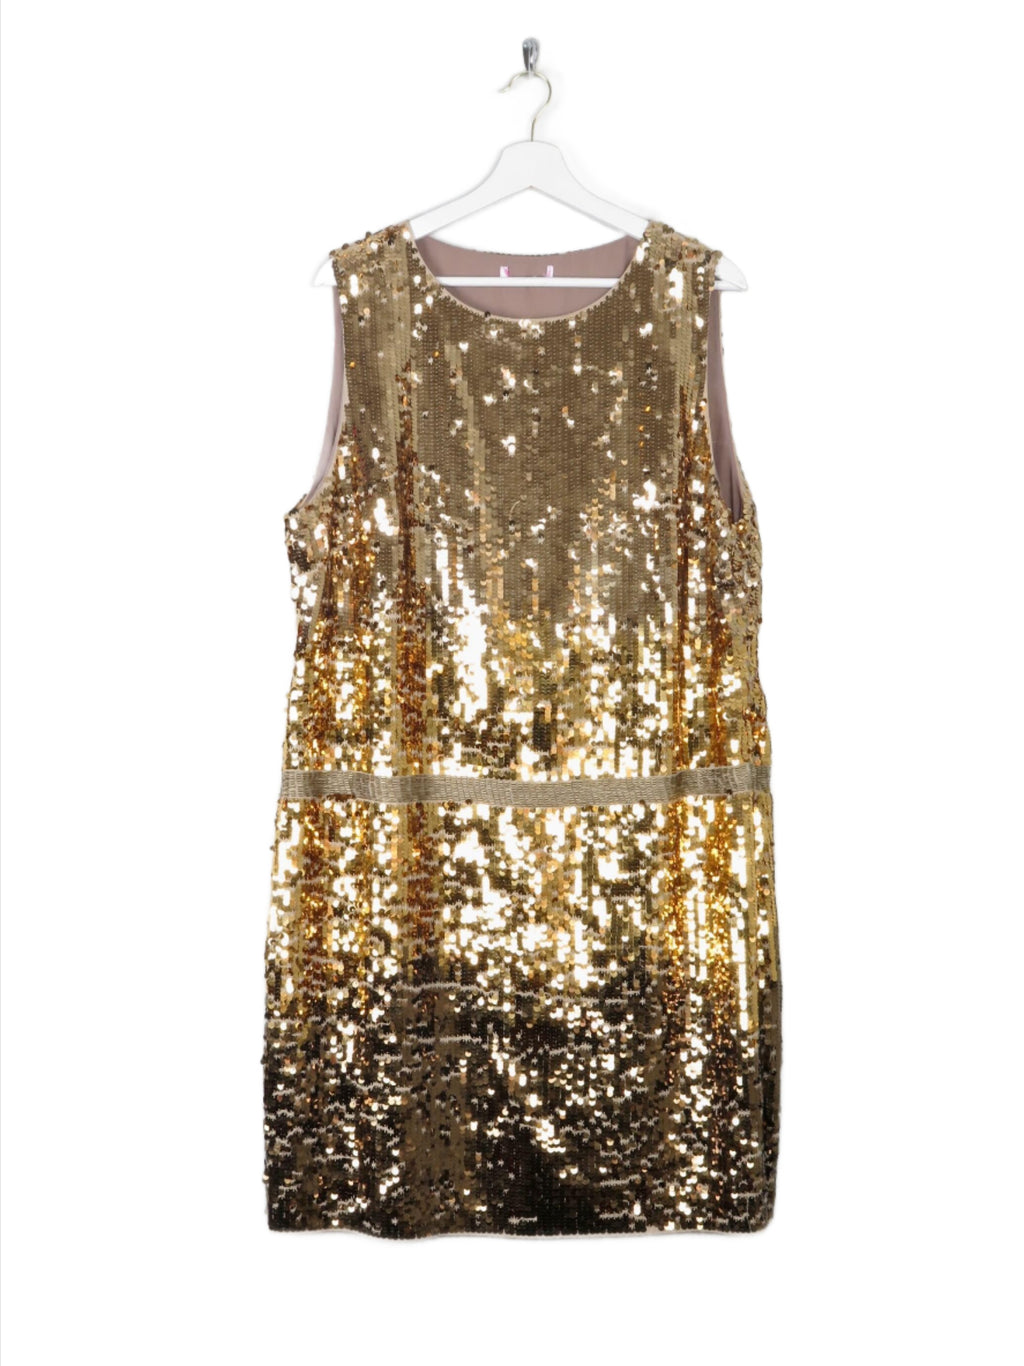 Vintage Gold Sequin 1920s Style Charleston Dress L/XL - The Harlequin